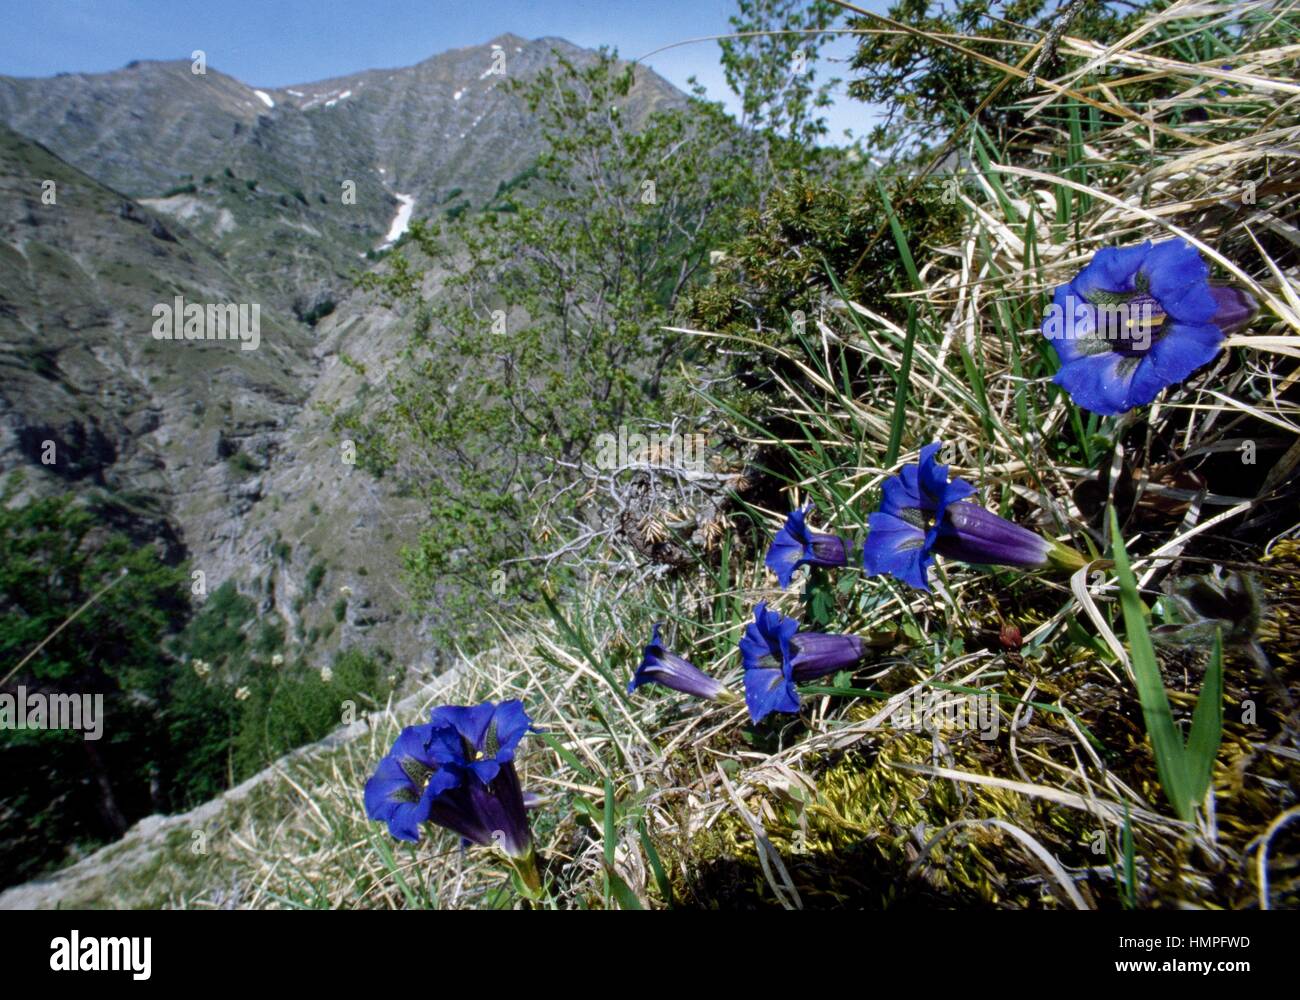 Gentian (Gentiana dinarica), Gentianaceae, Monti della Laga, Lazio, Italy. Stock Photo